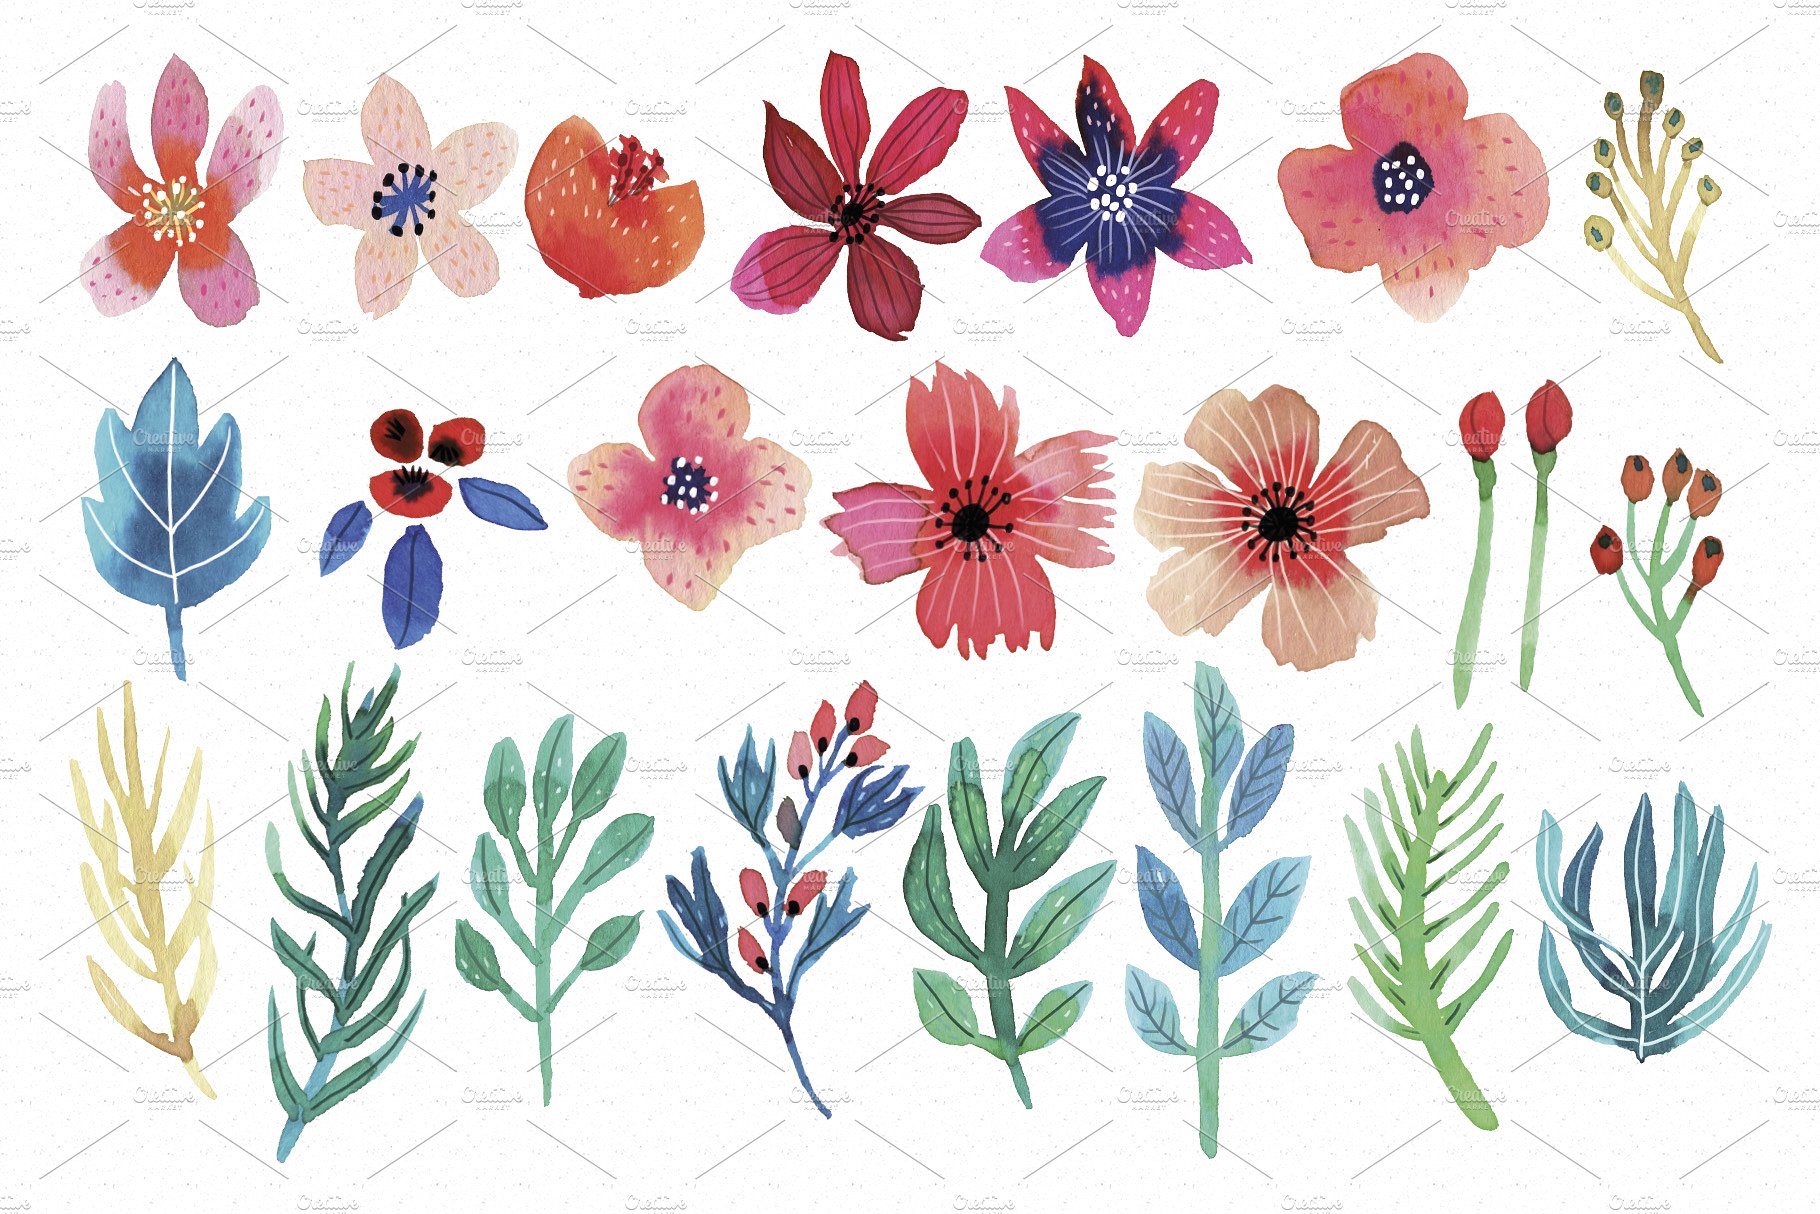 娇艳花卉水彩插画合集 Petite Flowers Watercolor Collection插图(2)